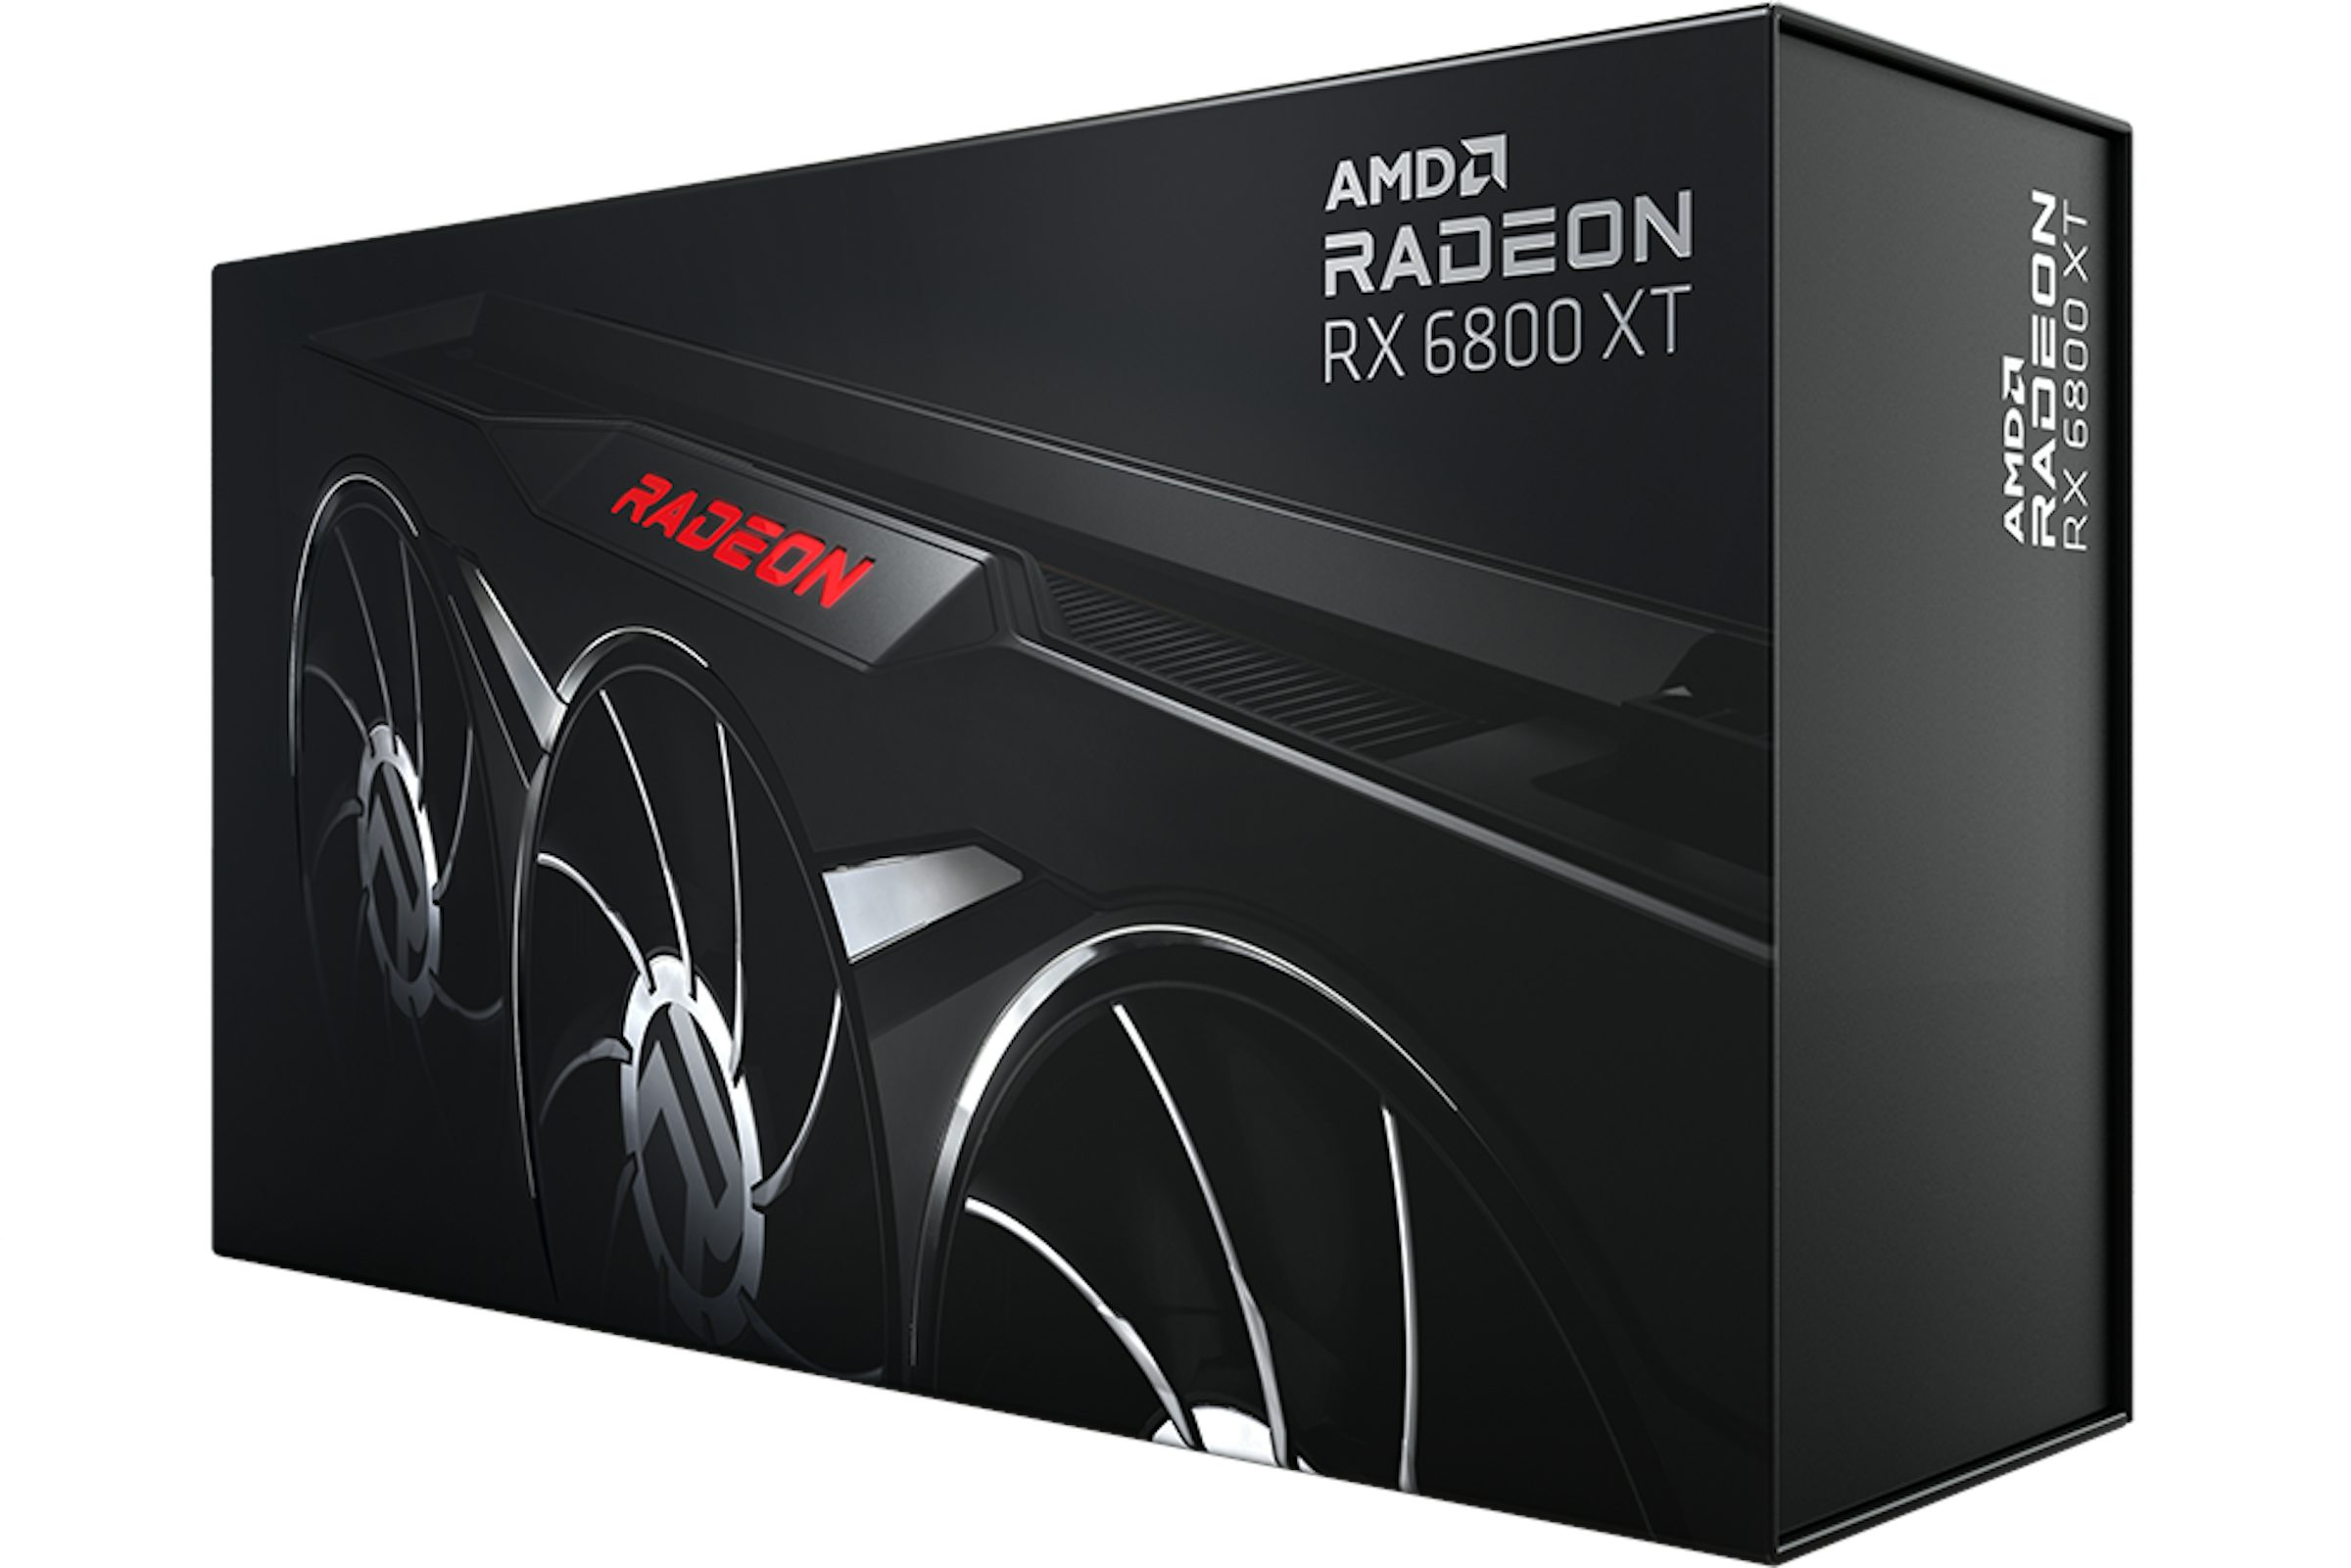 AMD Radeon RX 6800 XT Graphics Card - US